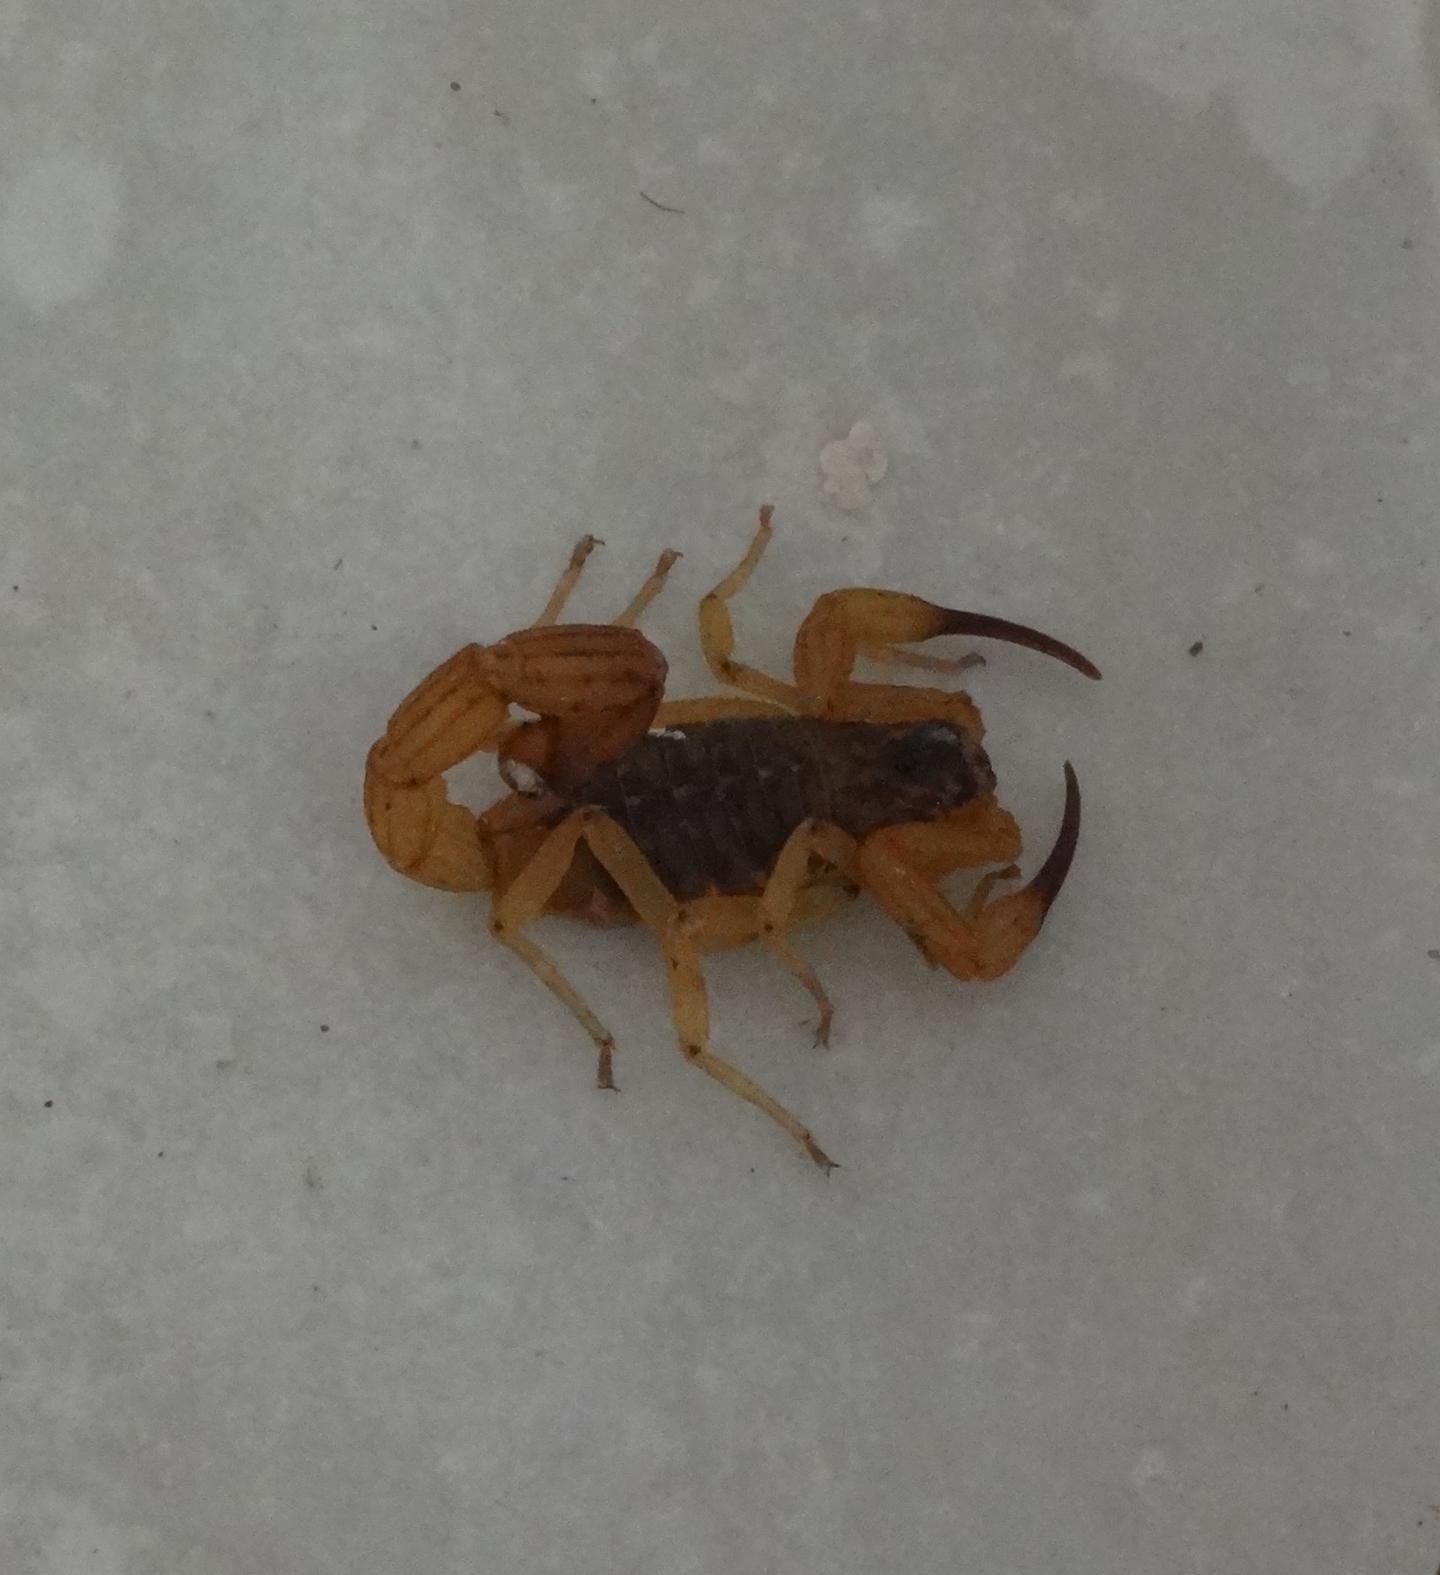 Scorpion envenomation